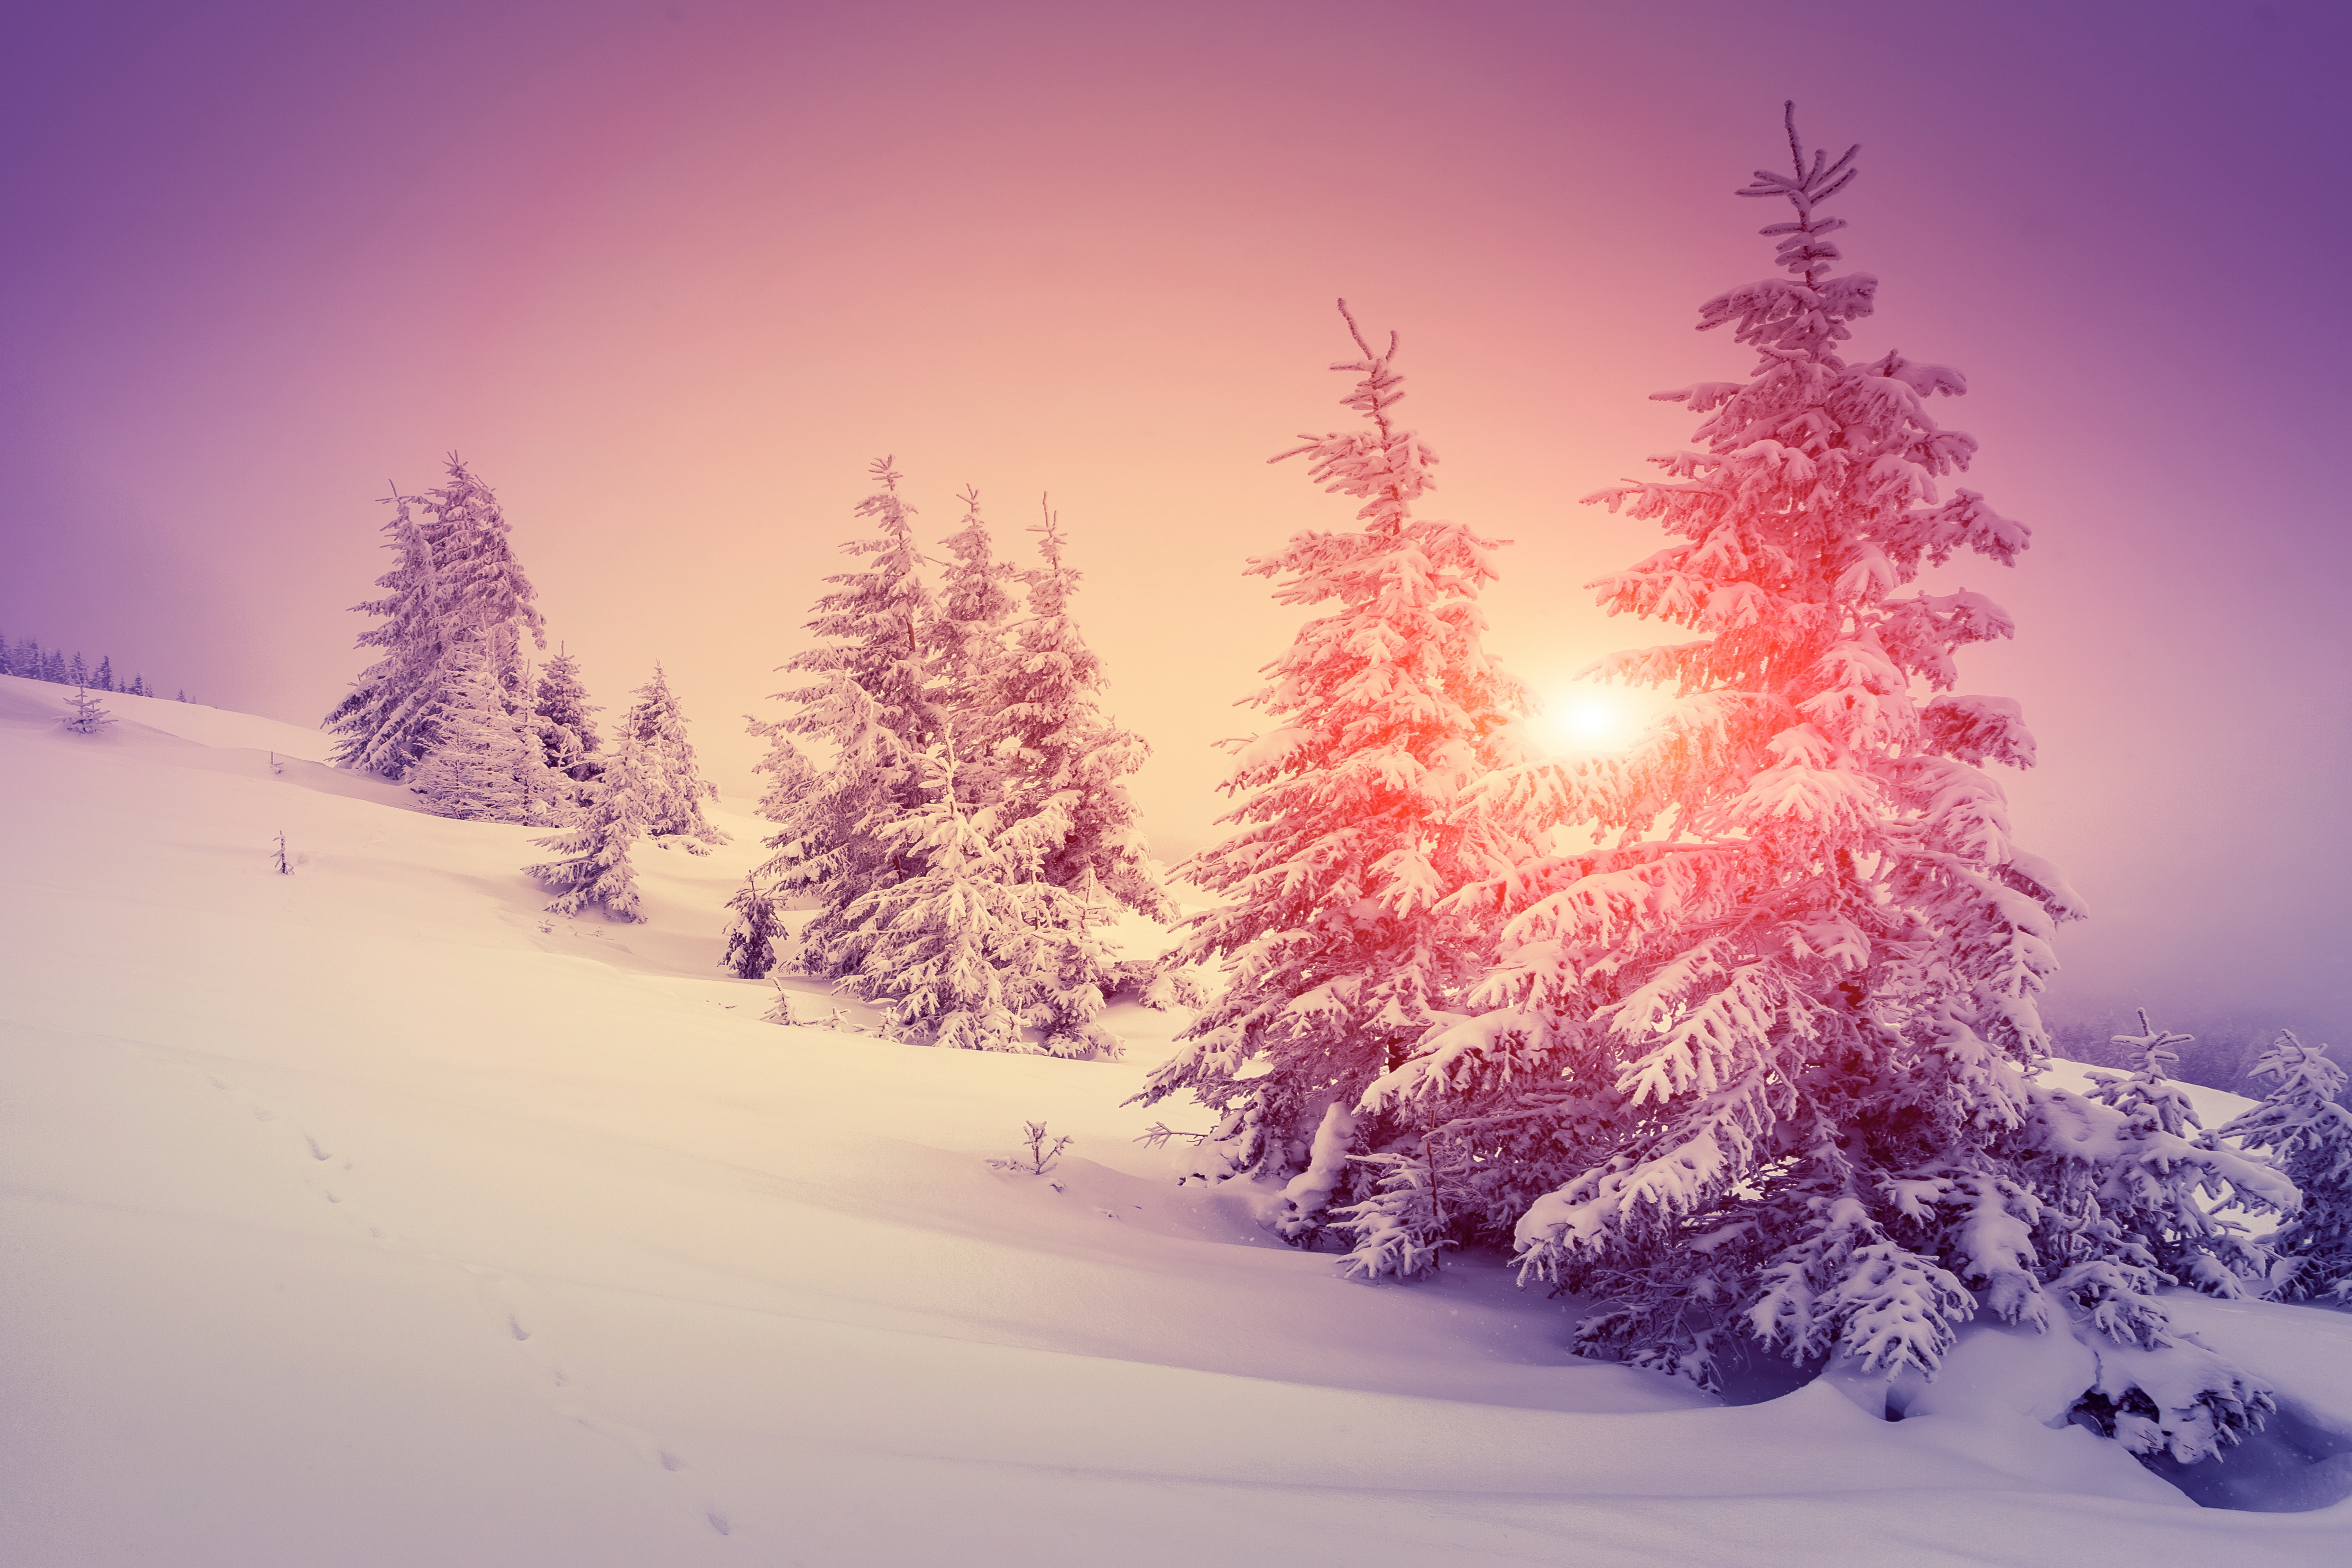 Winter Sun 4k Ultra HD Wallpapers